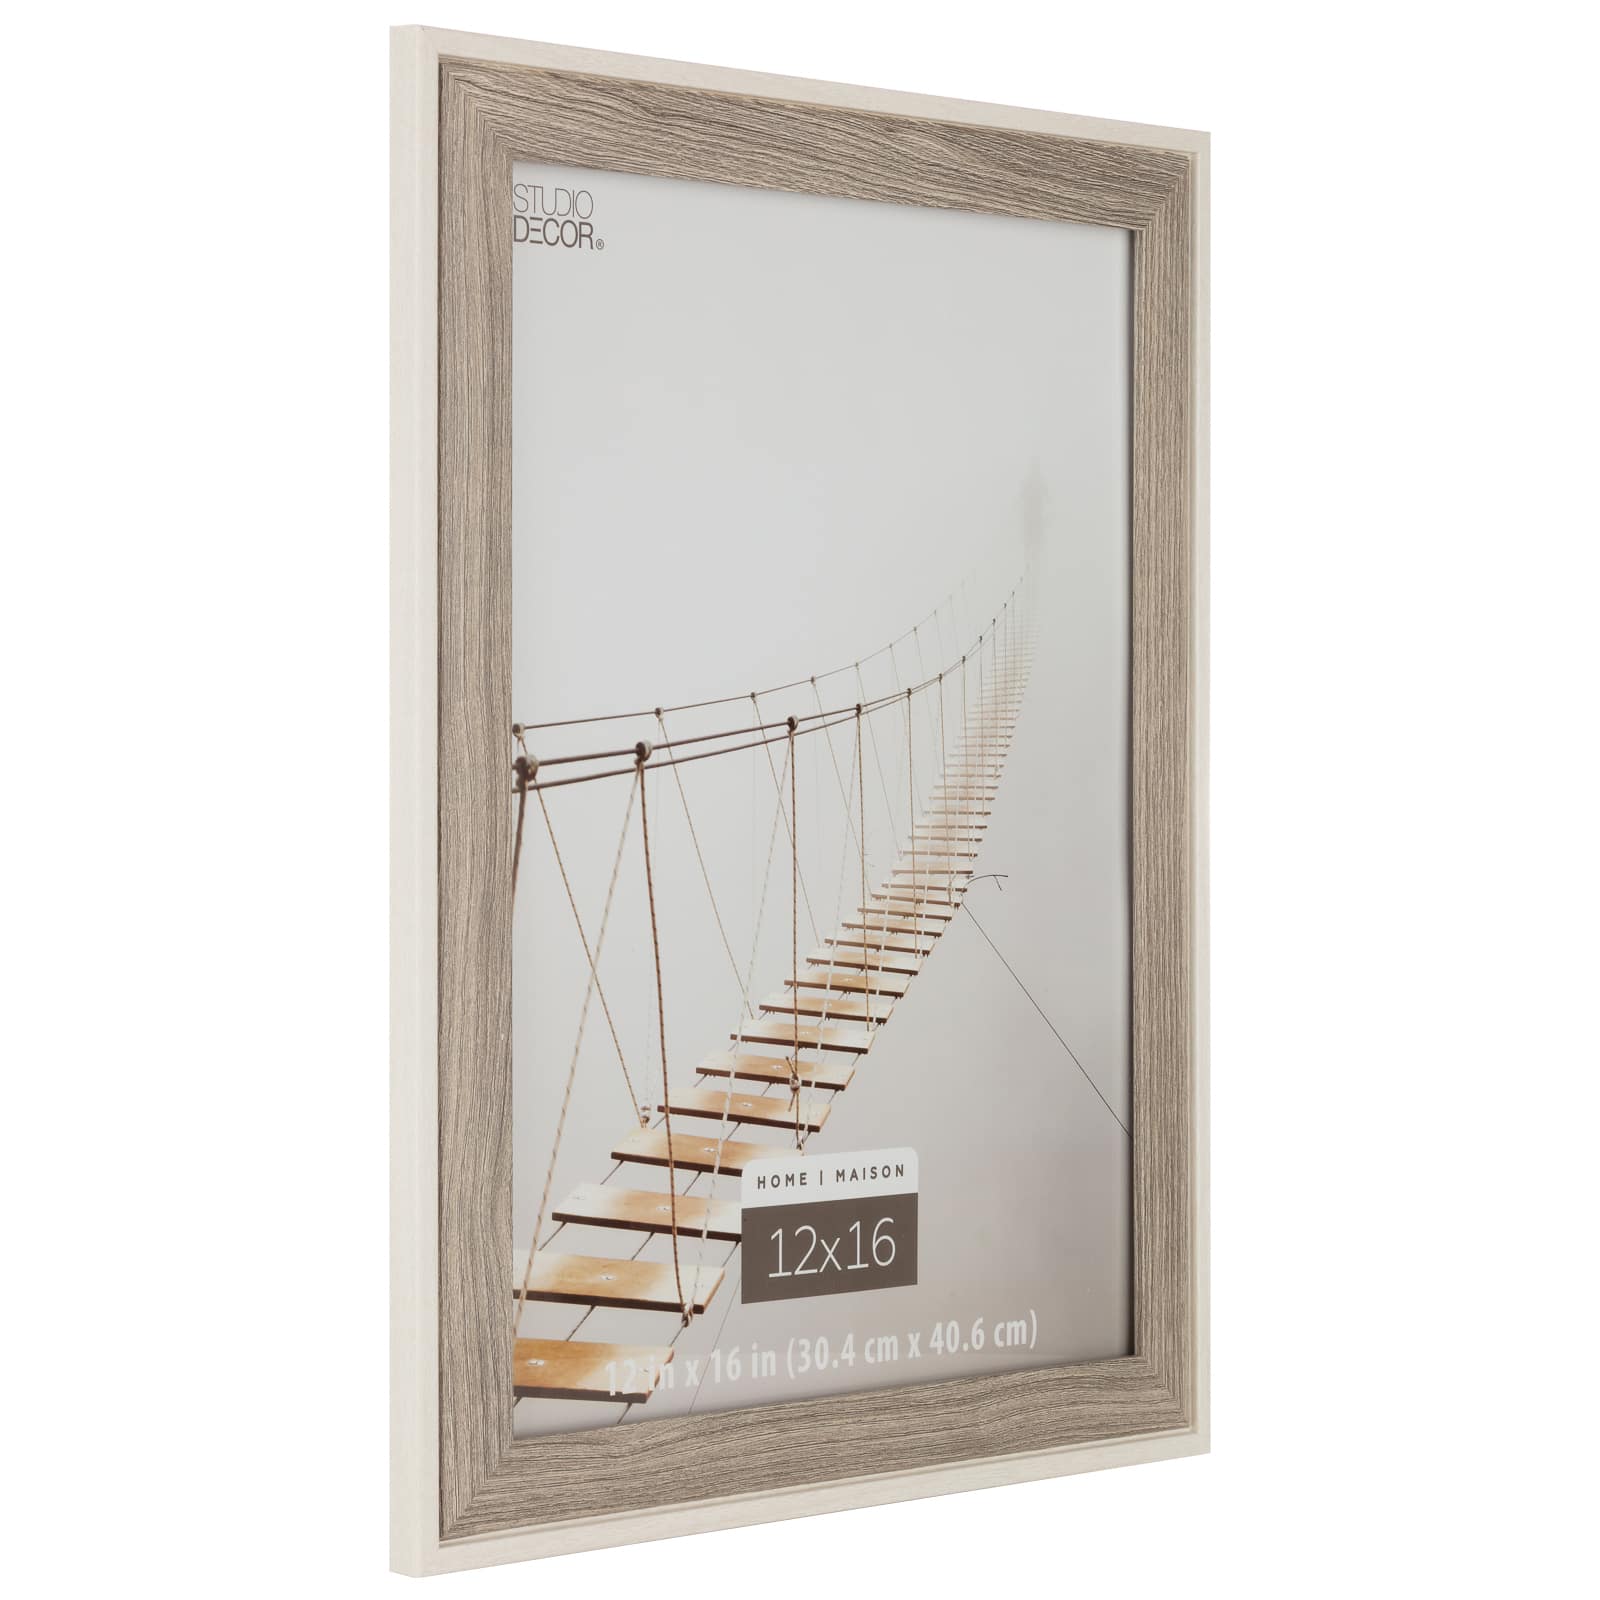 Graywash &#x26; White Frame, Home by Studio D&#xE9;cor&#xAE;